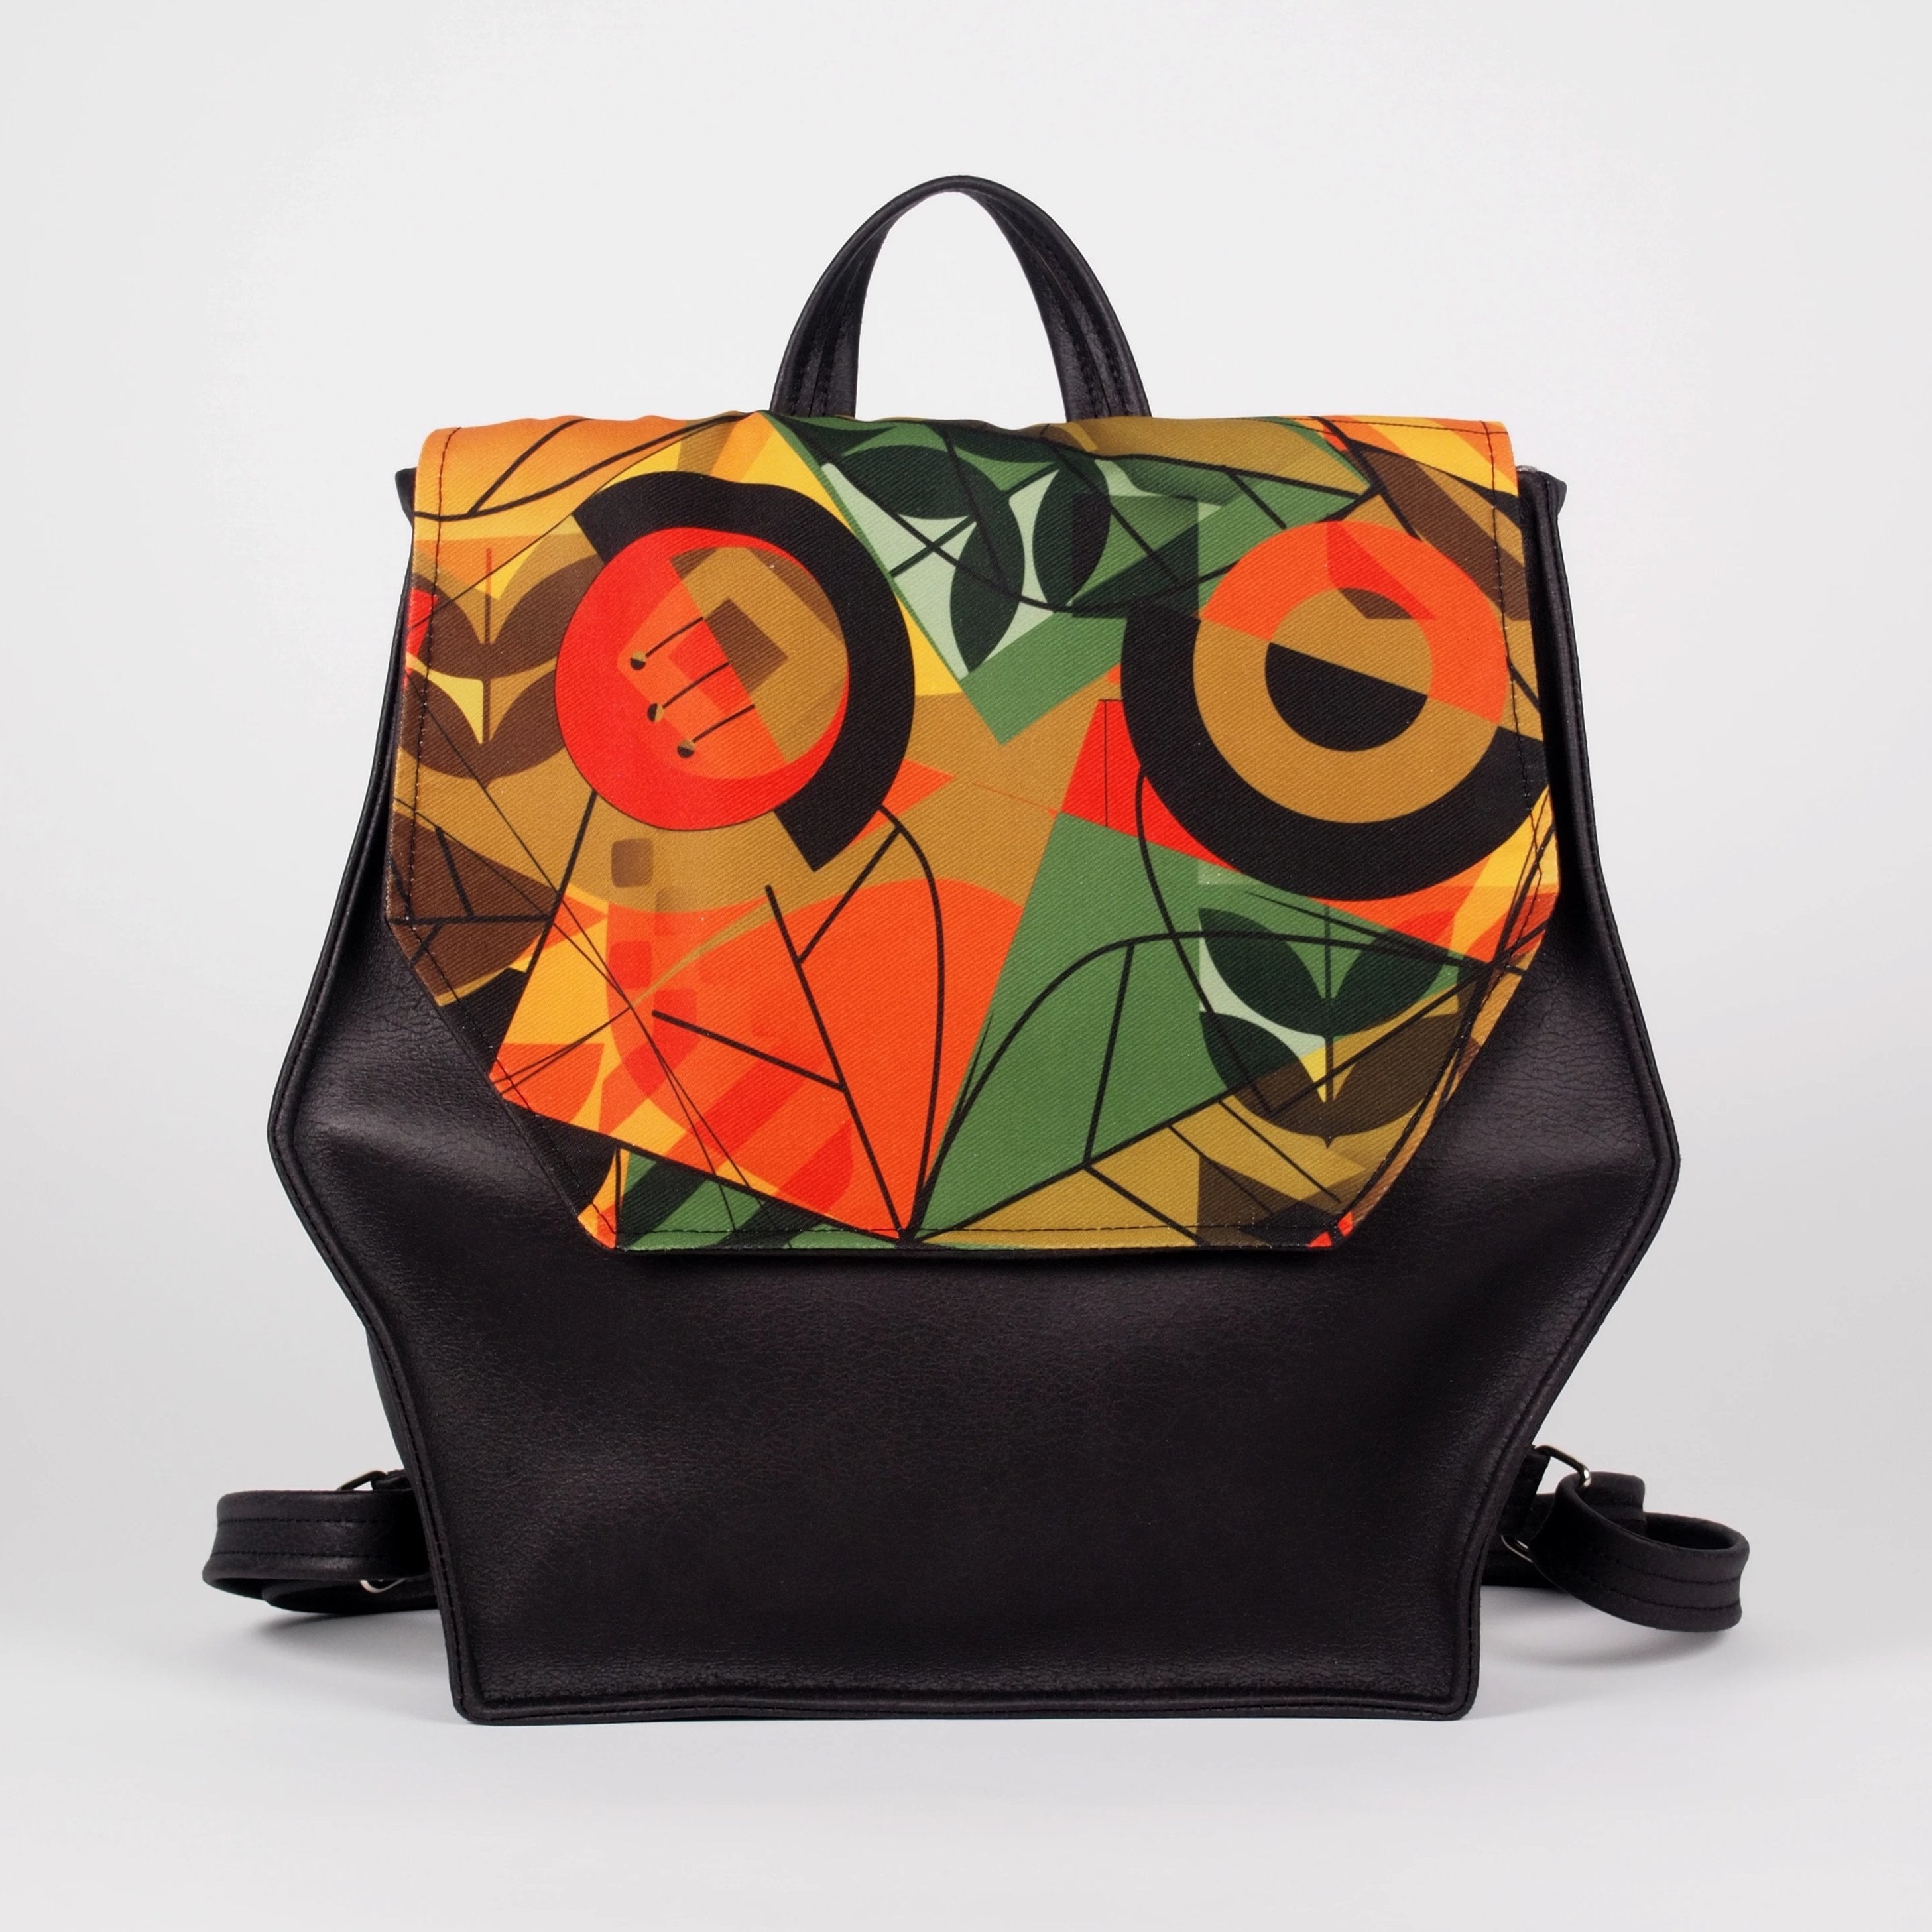 Bardo backpack torero - Geometric flowers - Premium  from BARDO ART WORKS - Just lv82.00! Shop now at BARDO ART WORKS